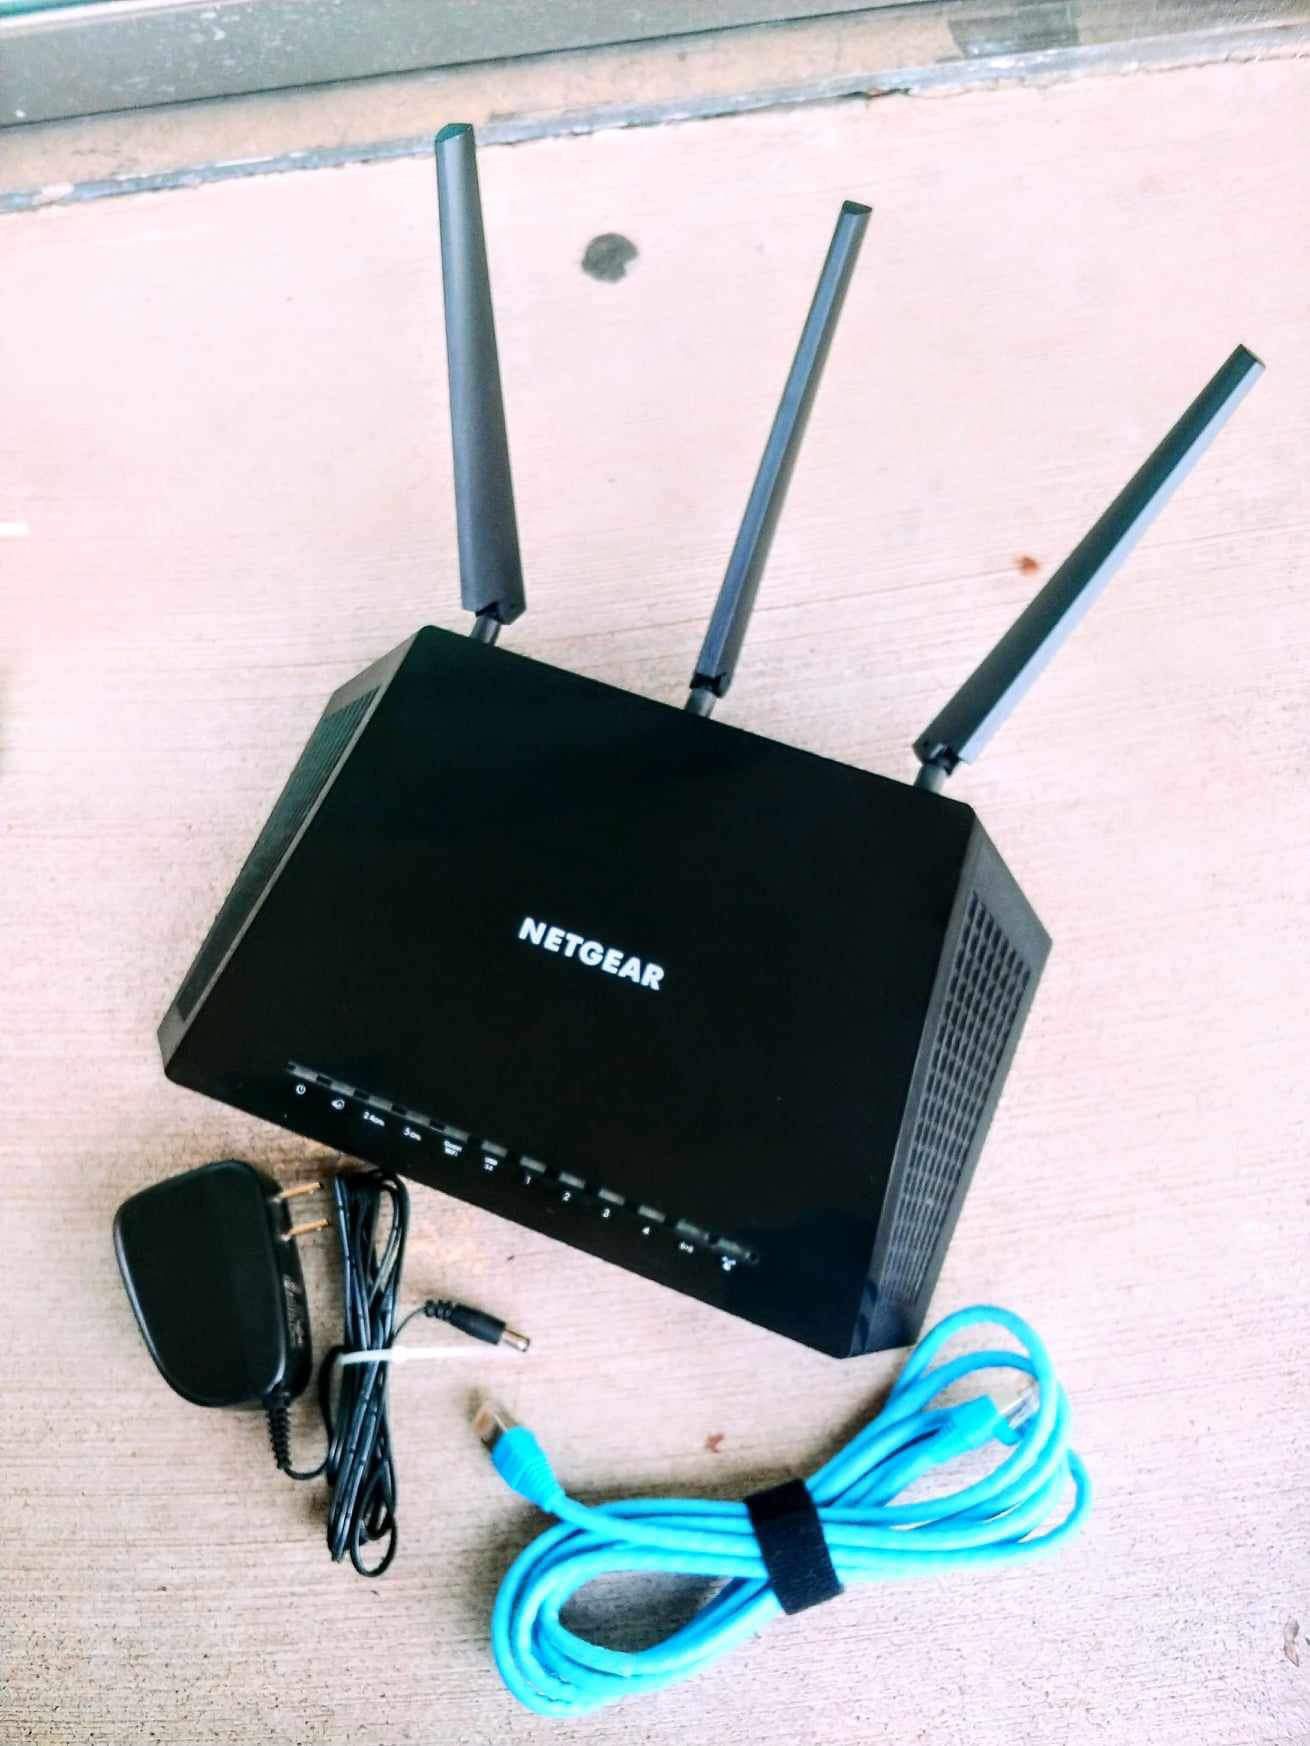 Netgear R6400 AC1750 Smart Wi-Fi Router V2 Black - Used